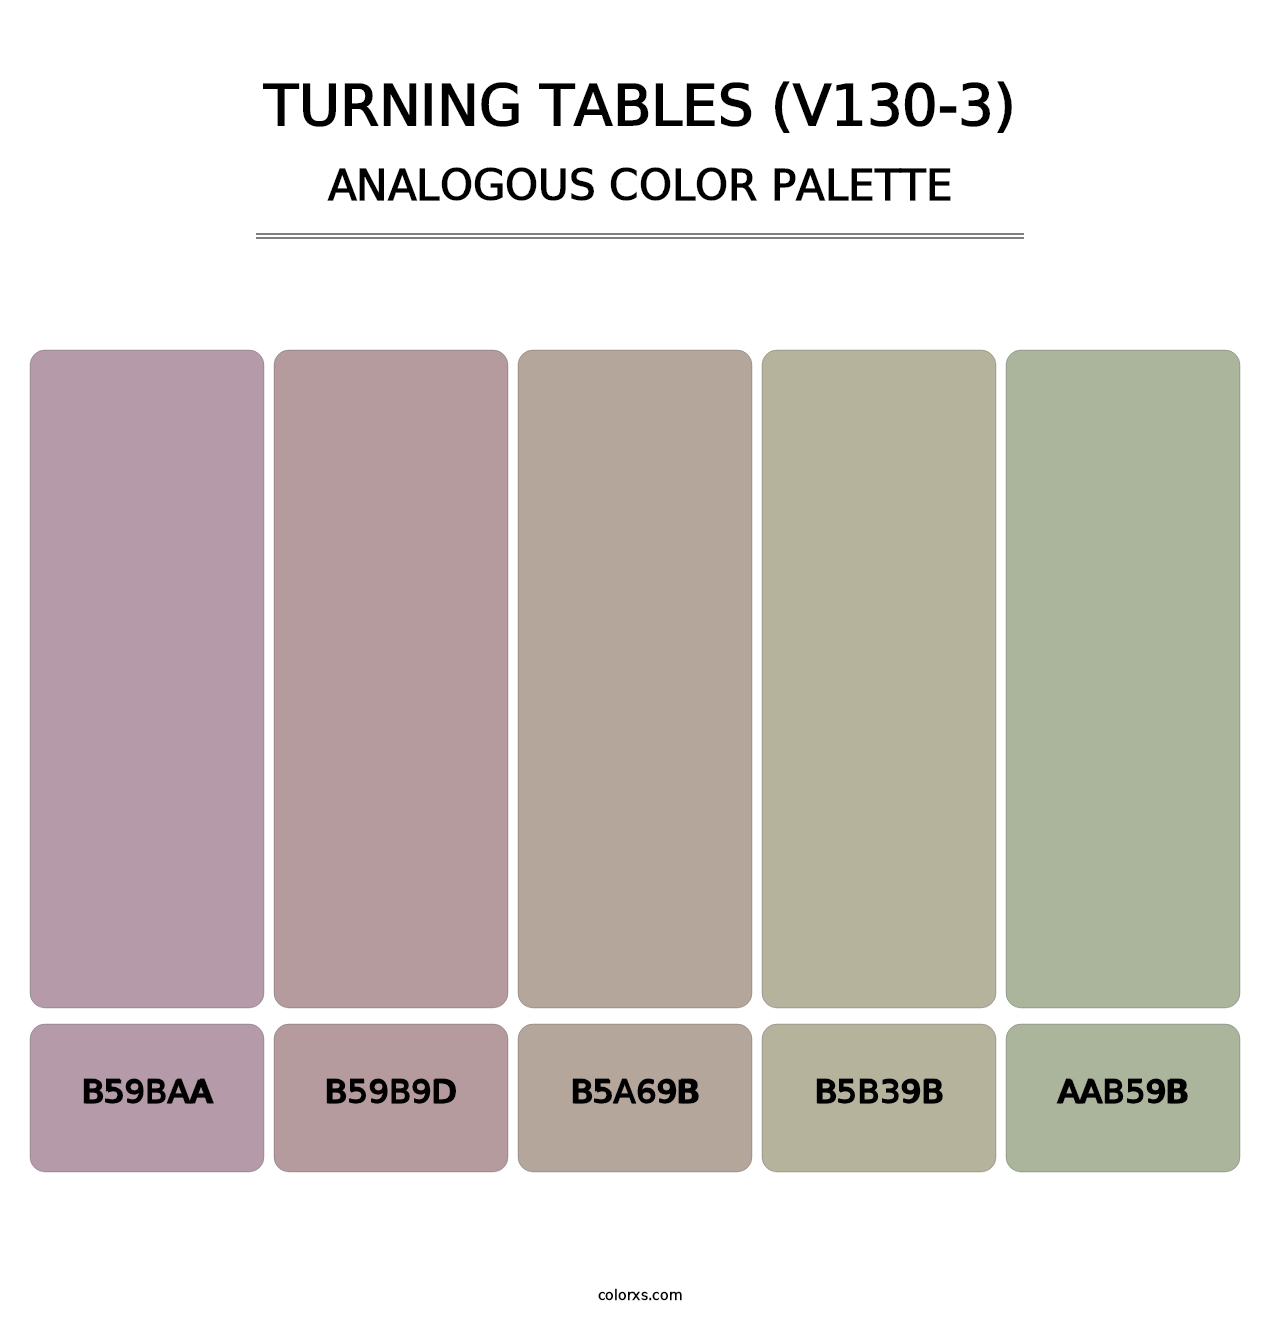 Turning Tables (V130-3) - Analogous Color Palette